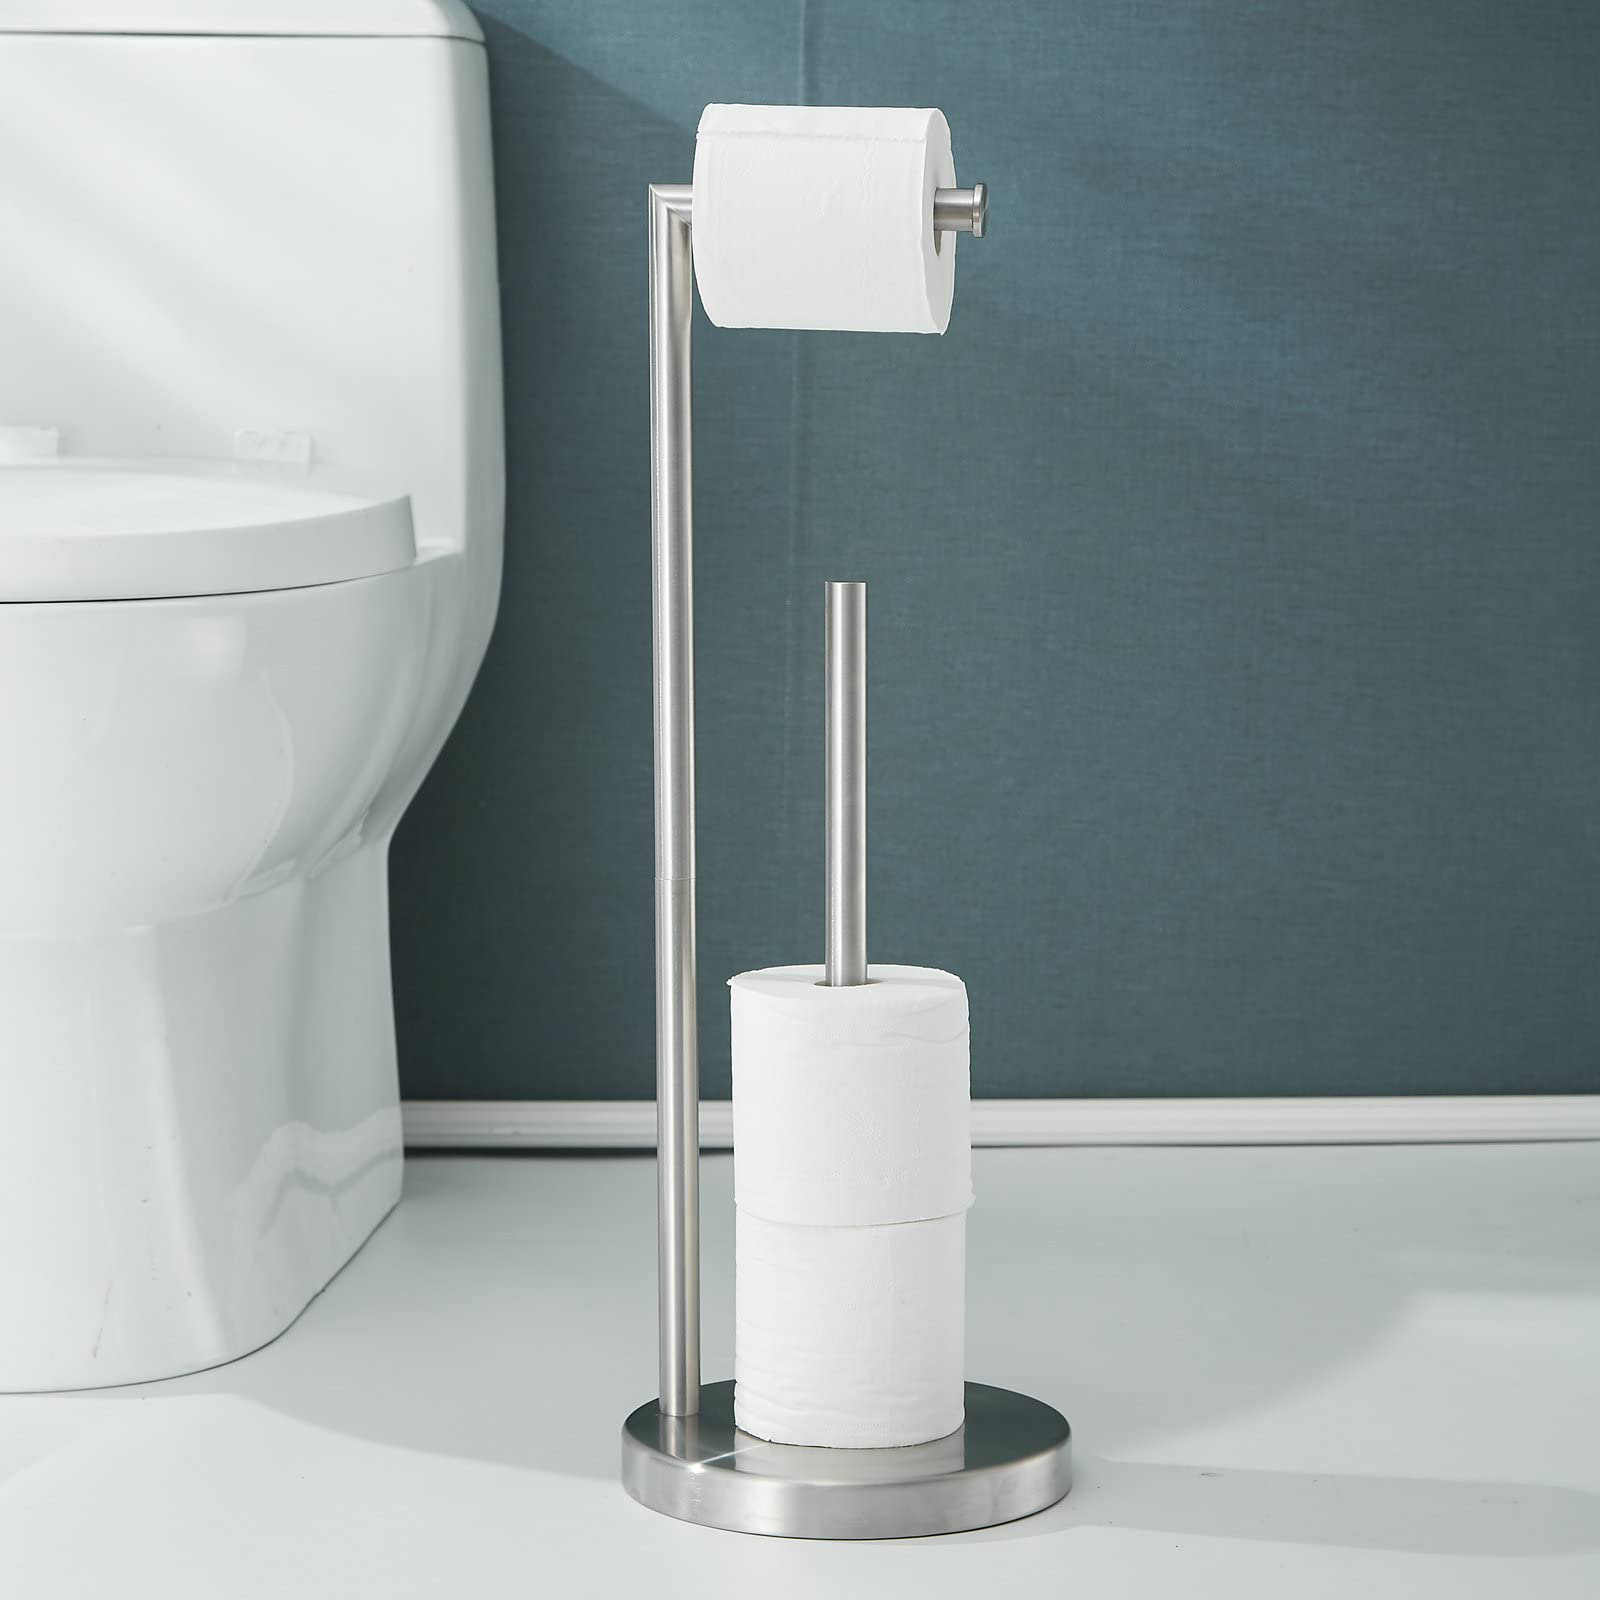 LUXESIT Freestanding Toilet Paper Holder